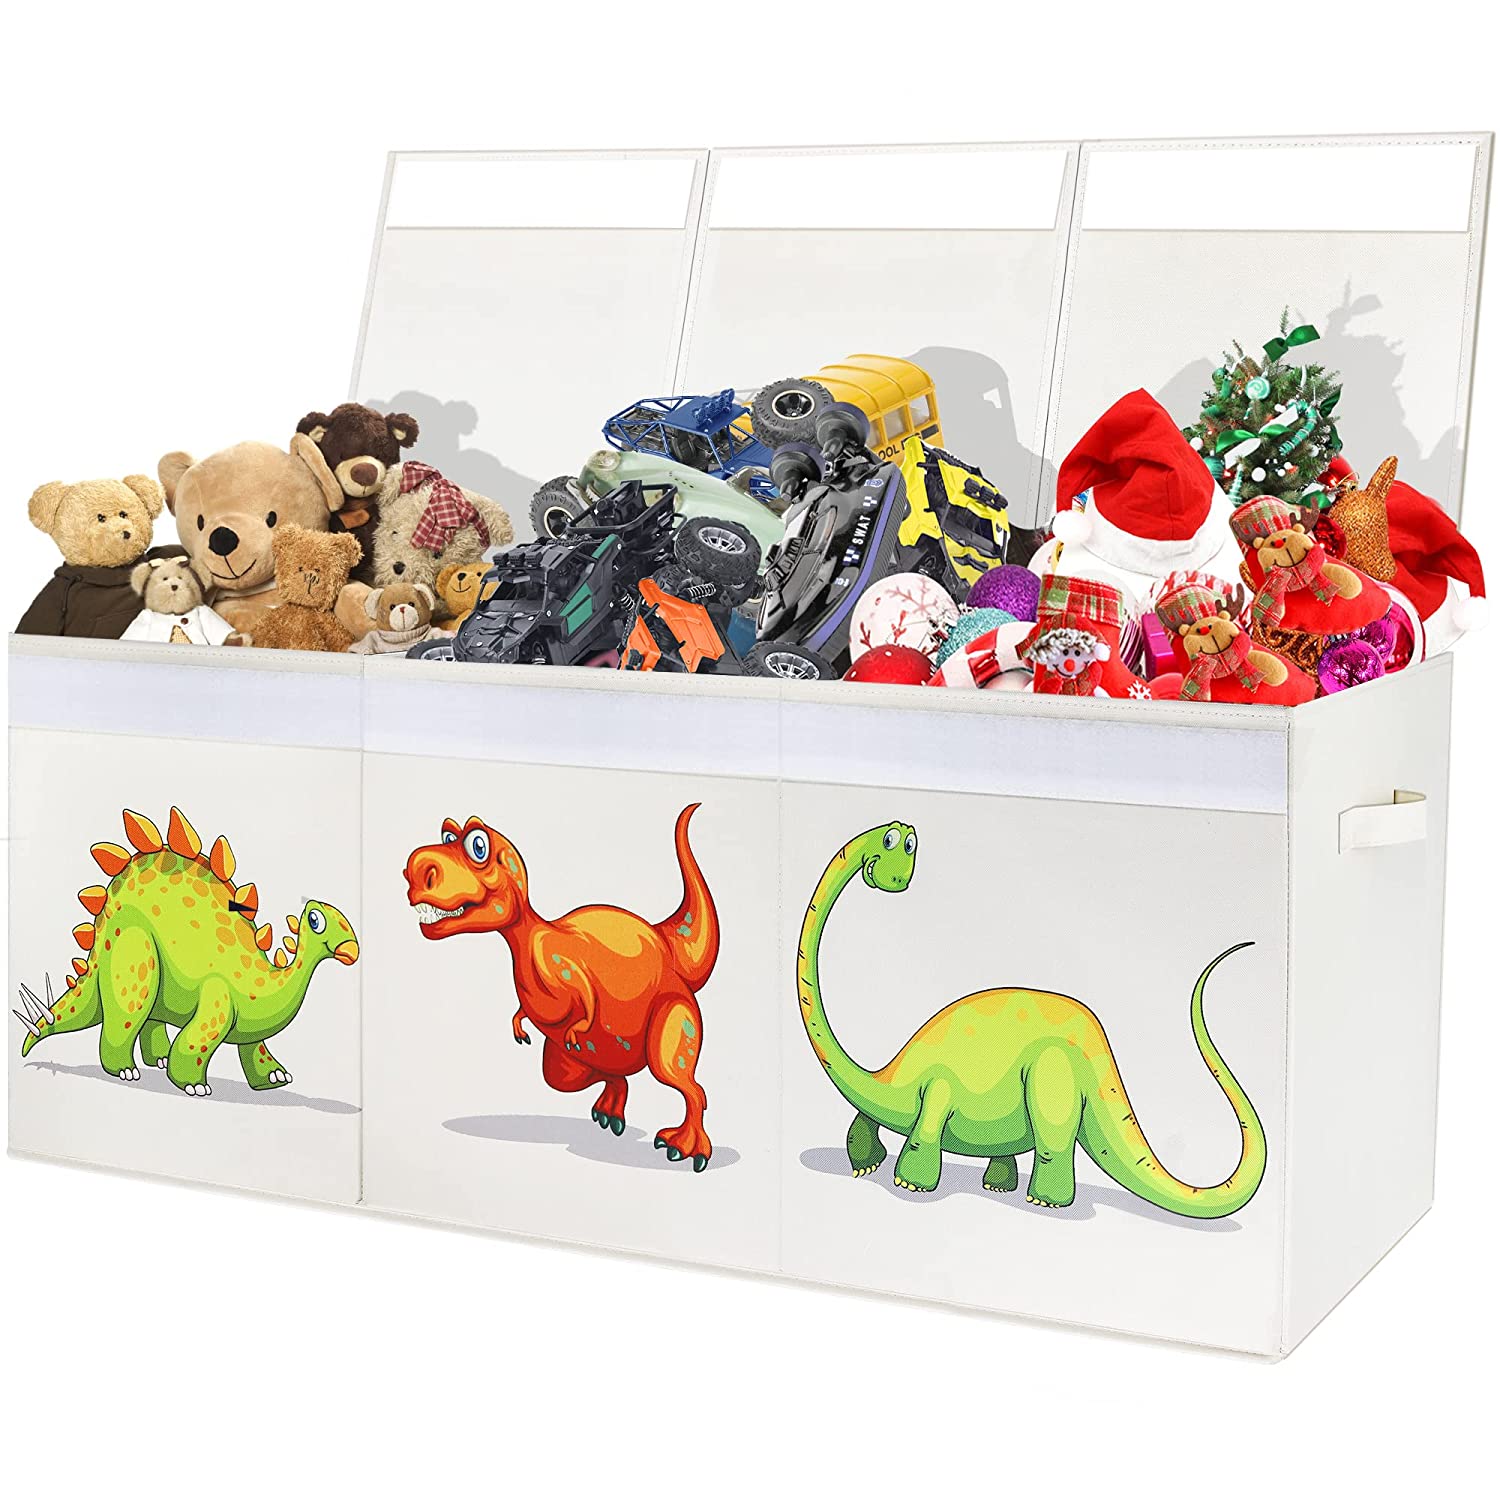 Toy Storage Chest - Large Kids Toy Box Chest Storage with Lids - Collapsible Sturdy Storage Bins Organizer - for Nursery Room, Playroom, Closet, Home Organization, School - 40.6X16.5X14.2"